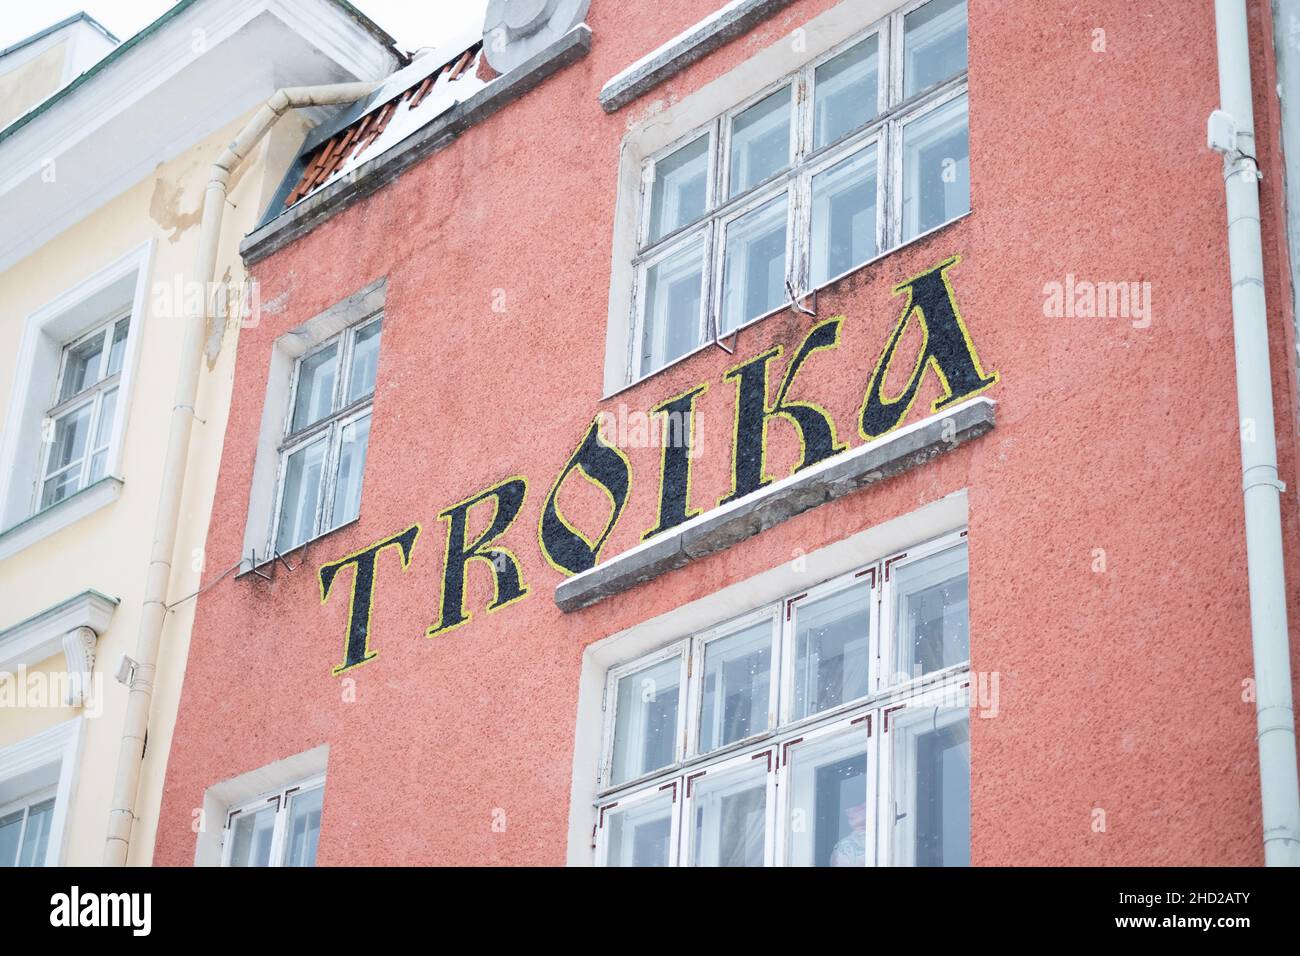 Tallinn, Estonia - Dec 4, 2021: Popular Russian cuisine restaurant Troika on Town Hall square. Stock Photo